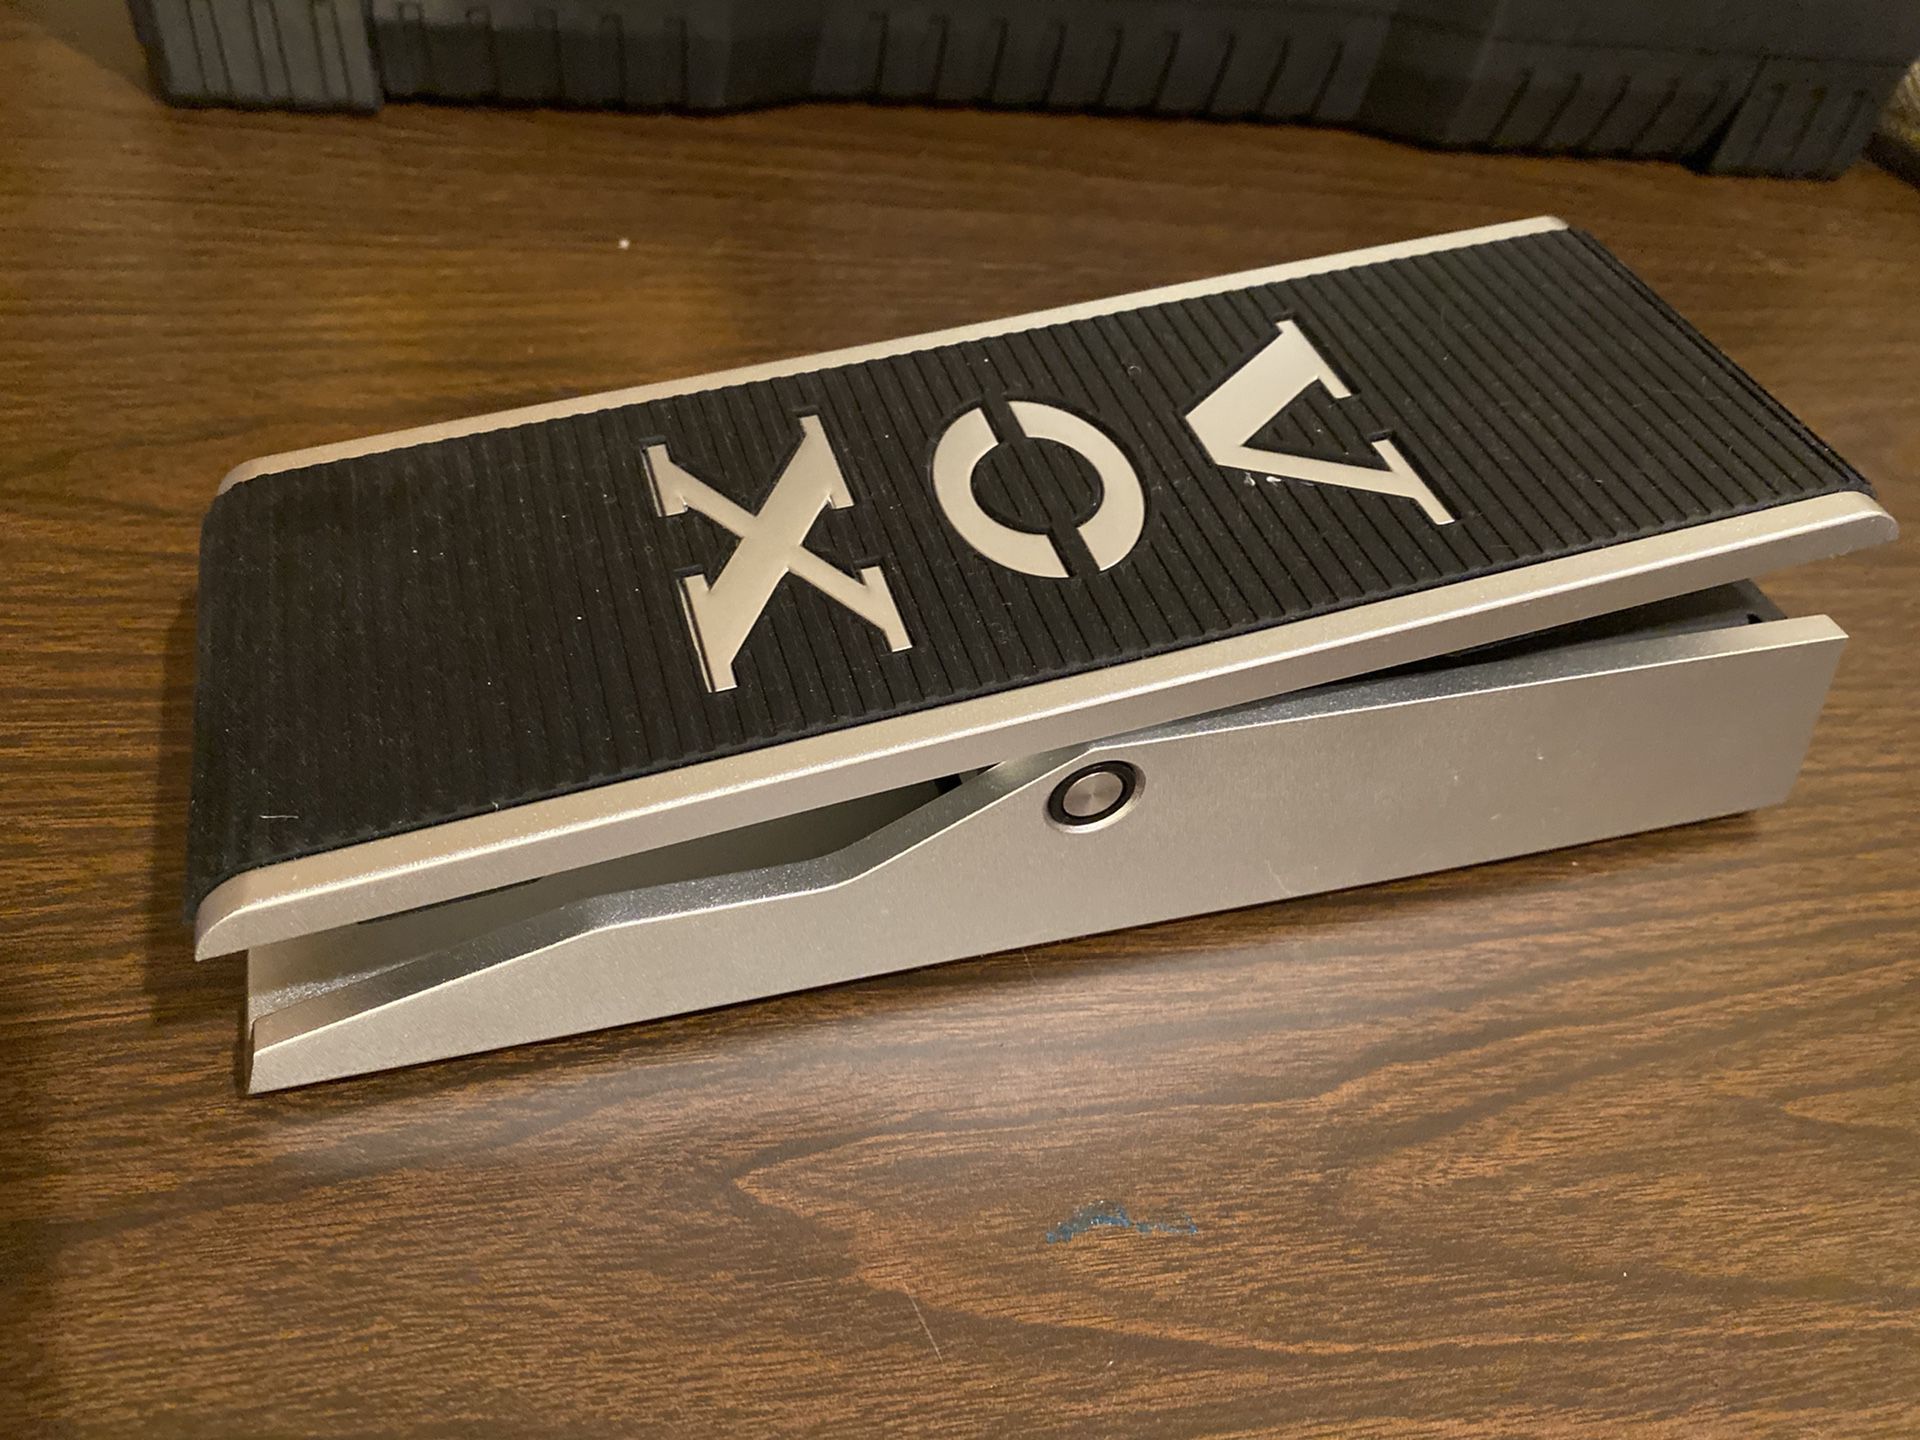 Vox V860 volume pedal - PRISTINE condition